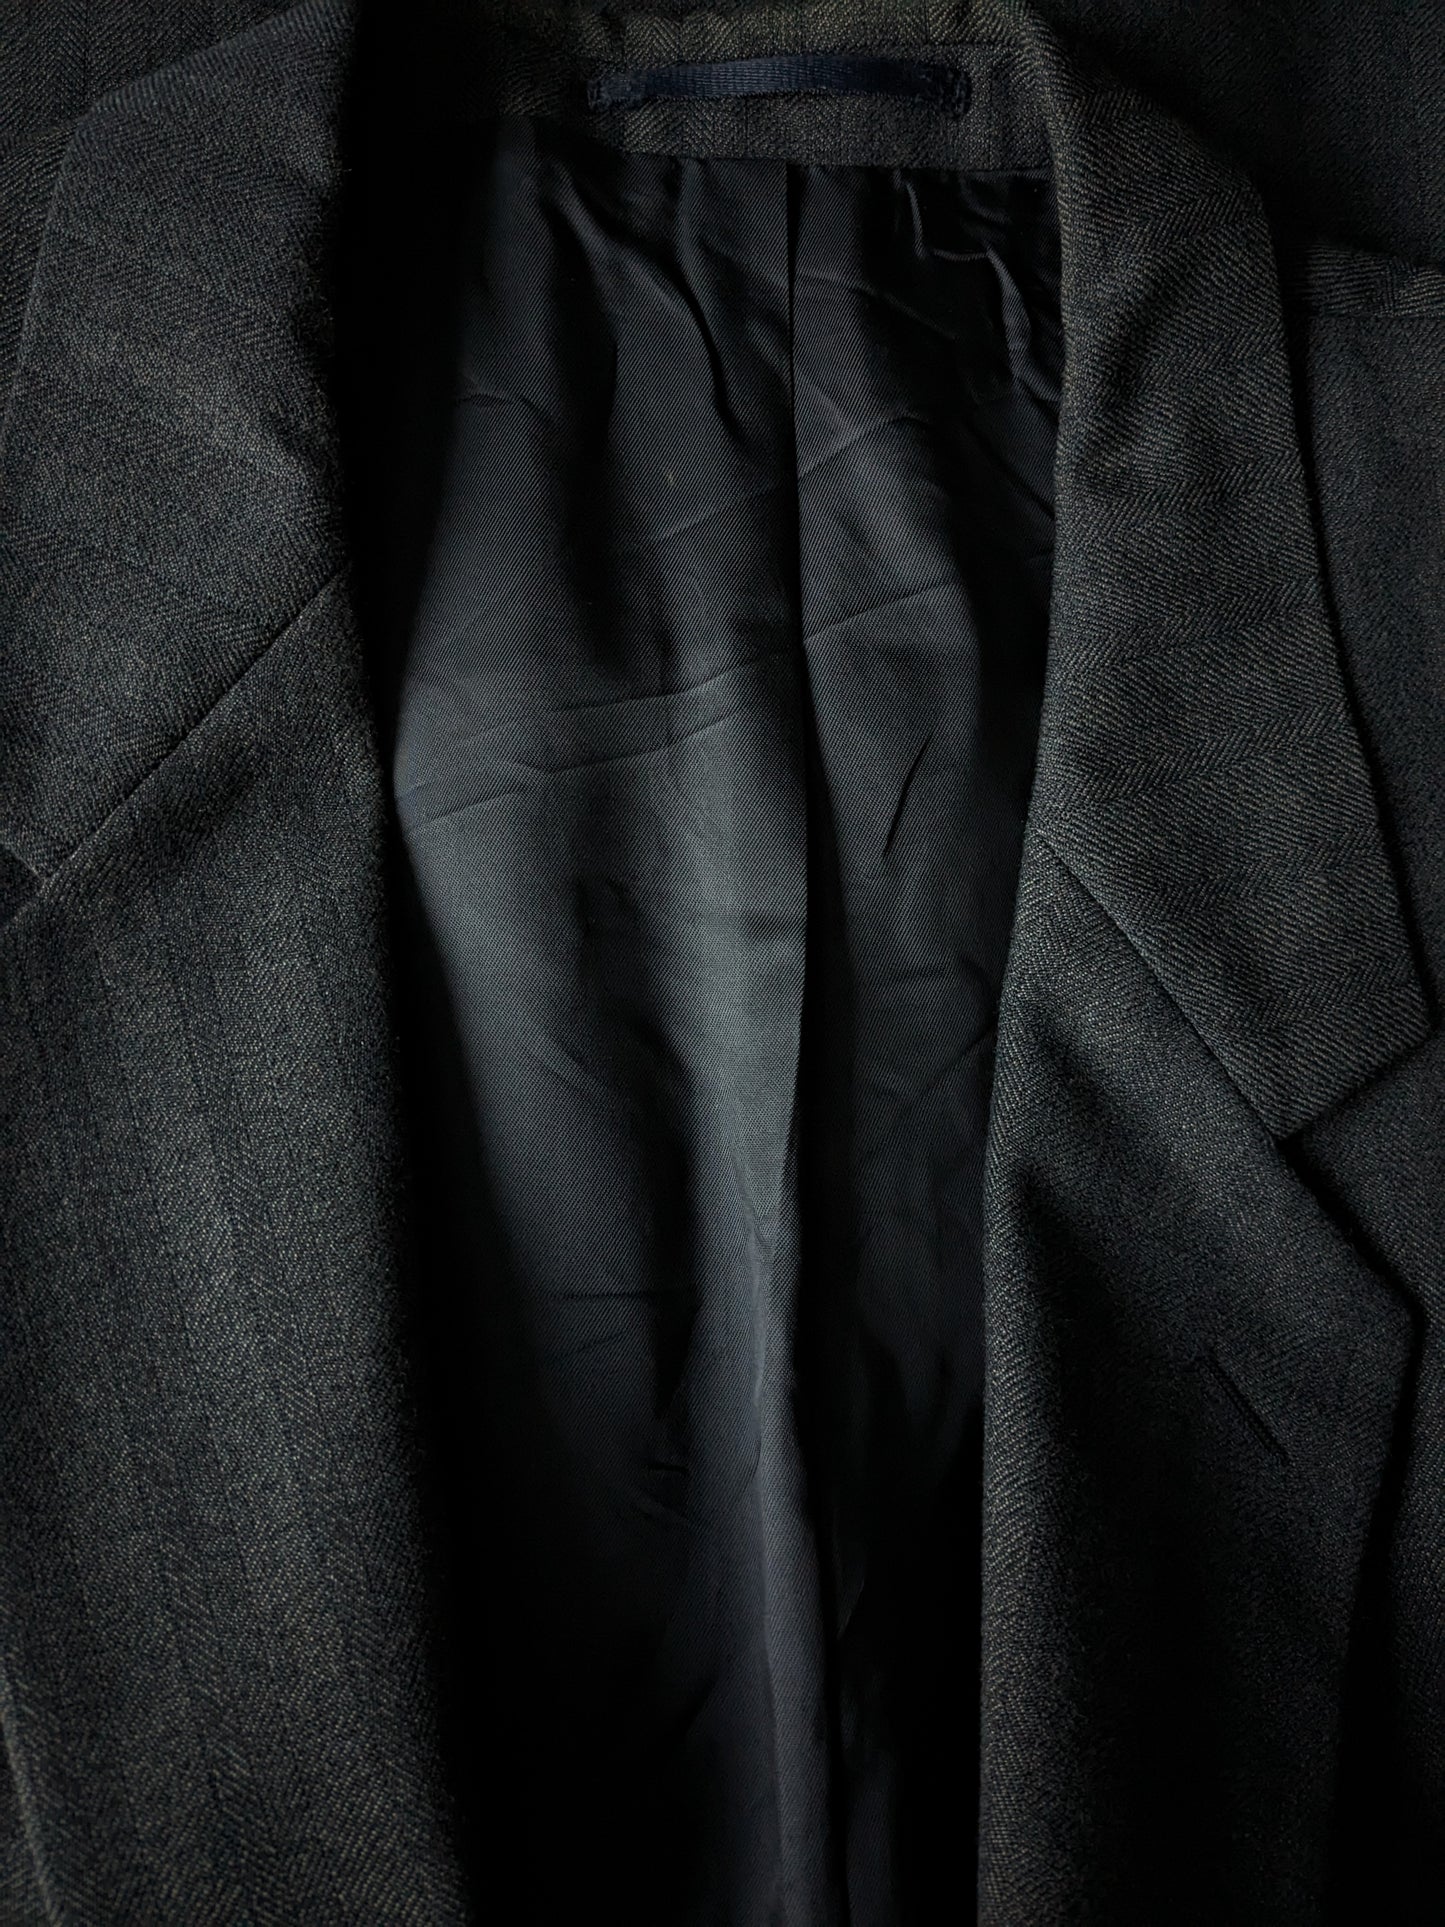 Chaqueta de lana de Varteks. Motivo gris de espiga negra. Tamaño 56 / xl. 45% de lana.